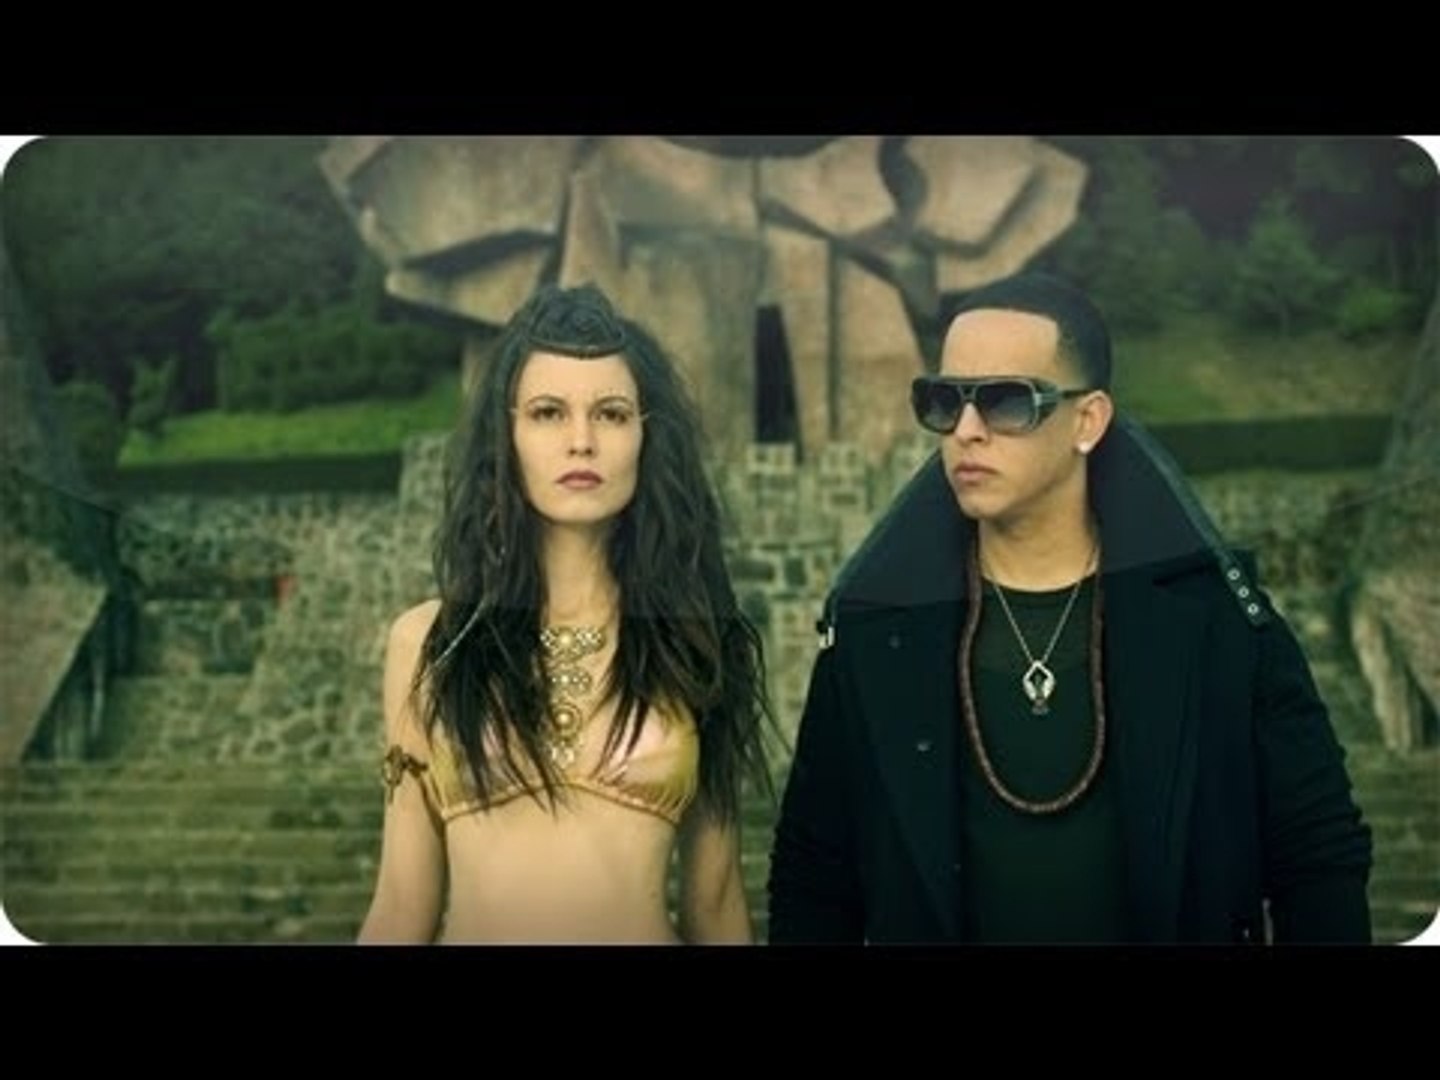 Daddy Yankee - "Limbo" (Music Video Trailer) - video Dailymotion